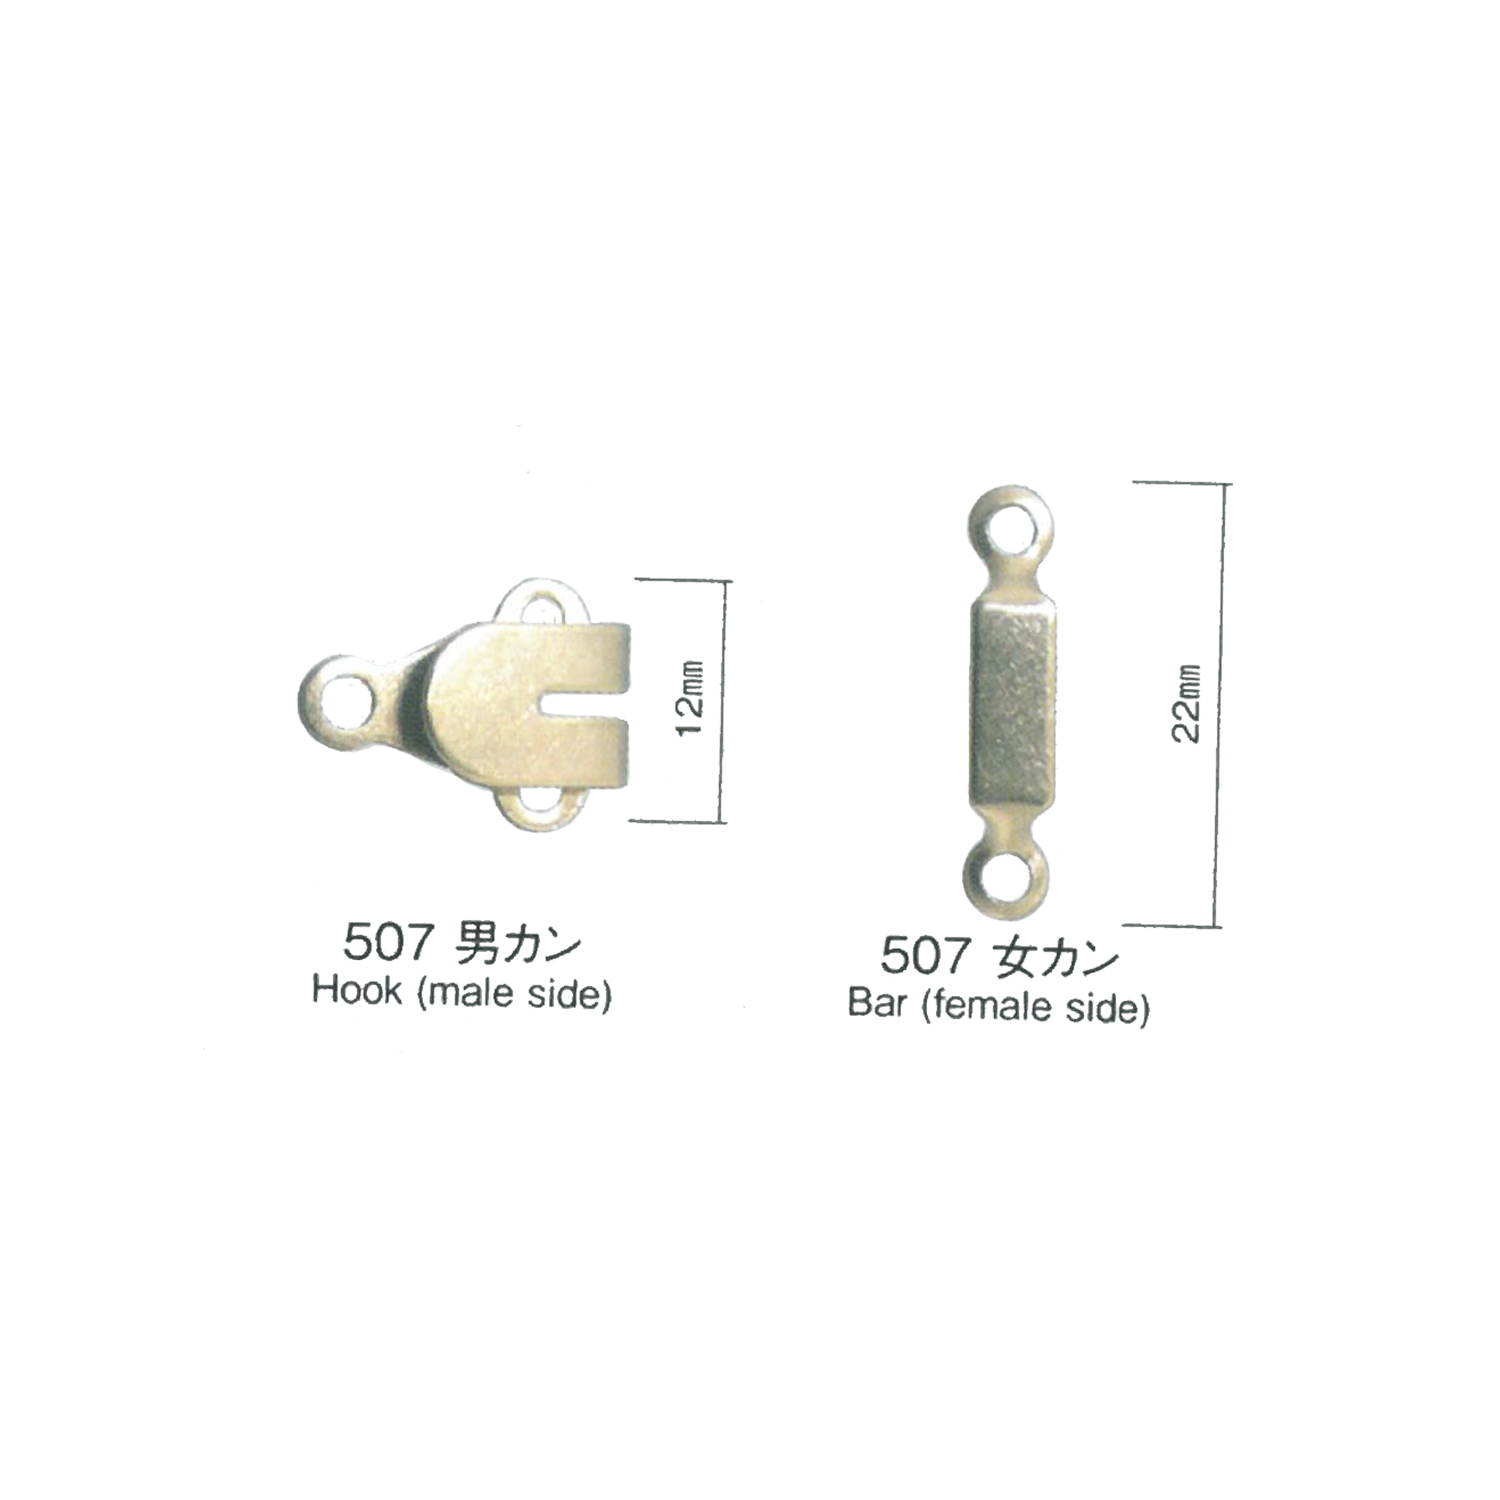 507 Front Hook (Hook And Eye Closure) * Needle Detector Compatible Morito